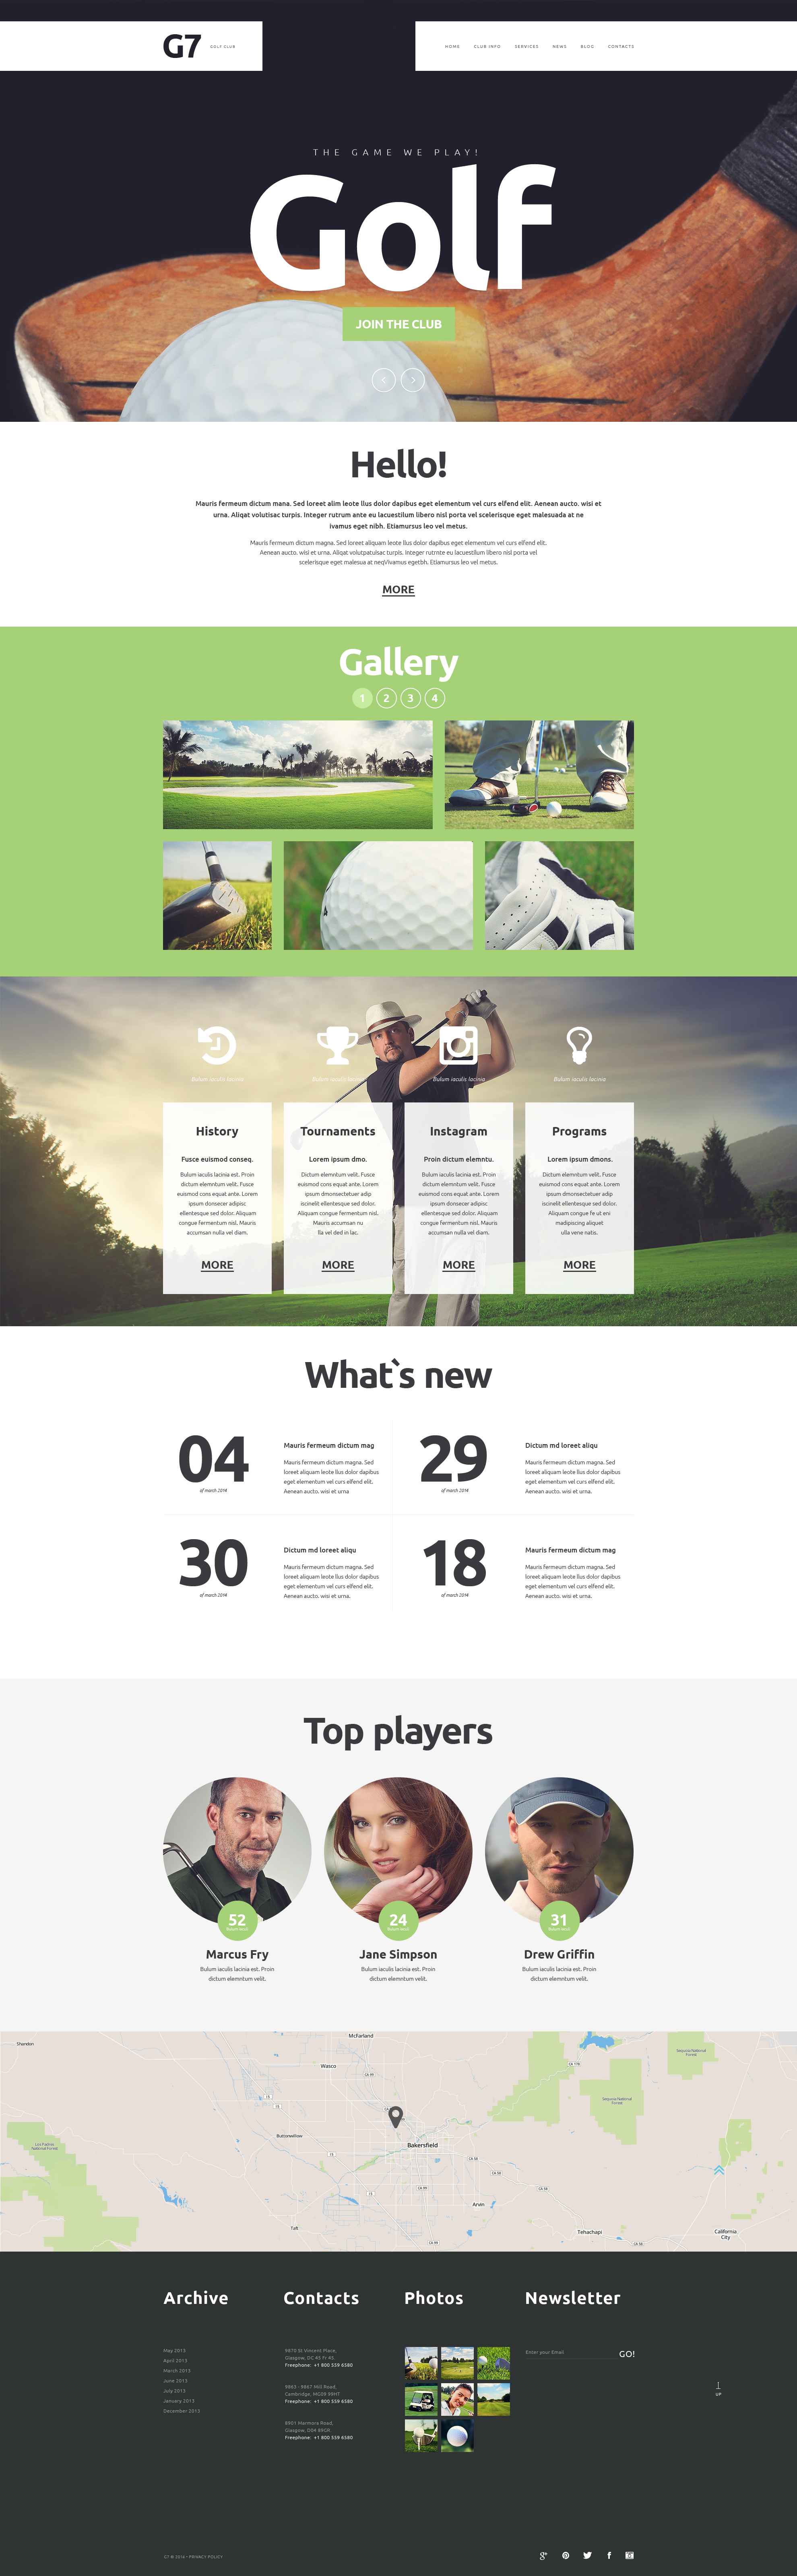 Golf Club Website Template 52364